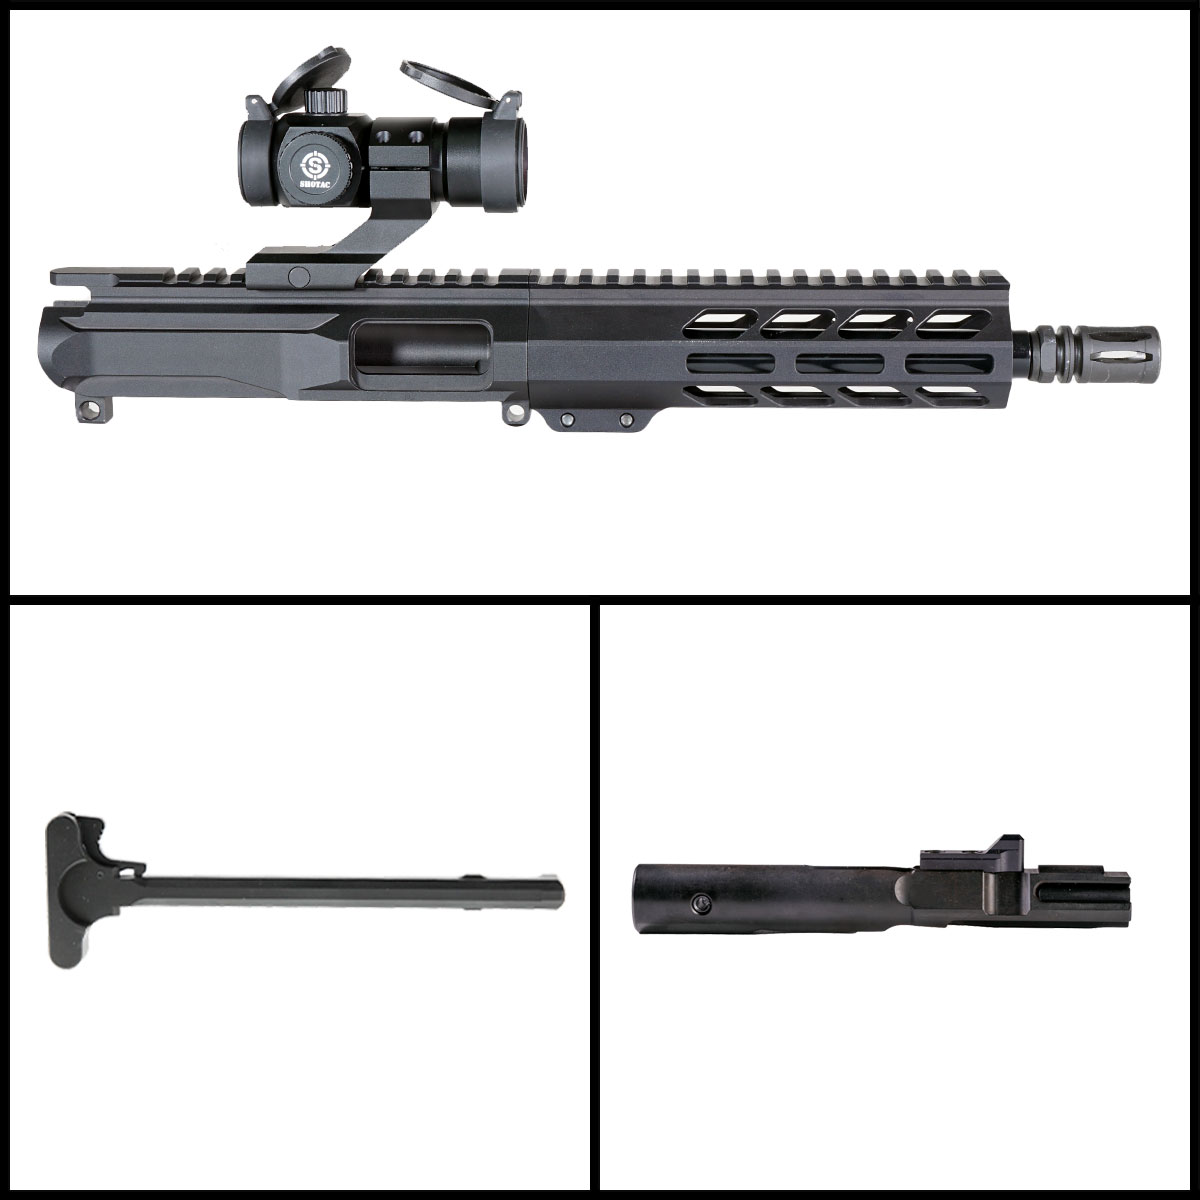 DD 'Eternal Night Gen 2 w/ Shotac Cantilever' 8.5-inch AR-15 9mm Nitride Pistol Complete Upper Build Kit